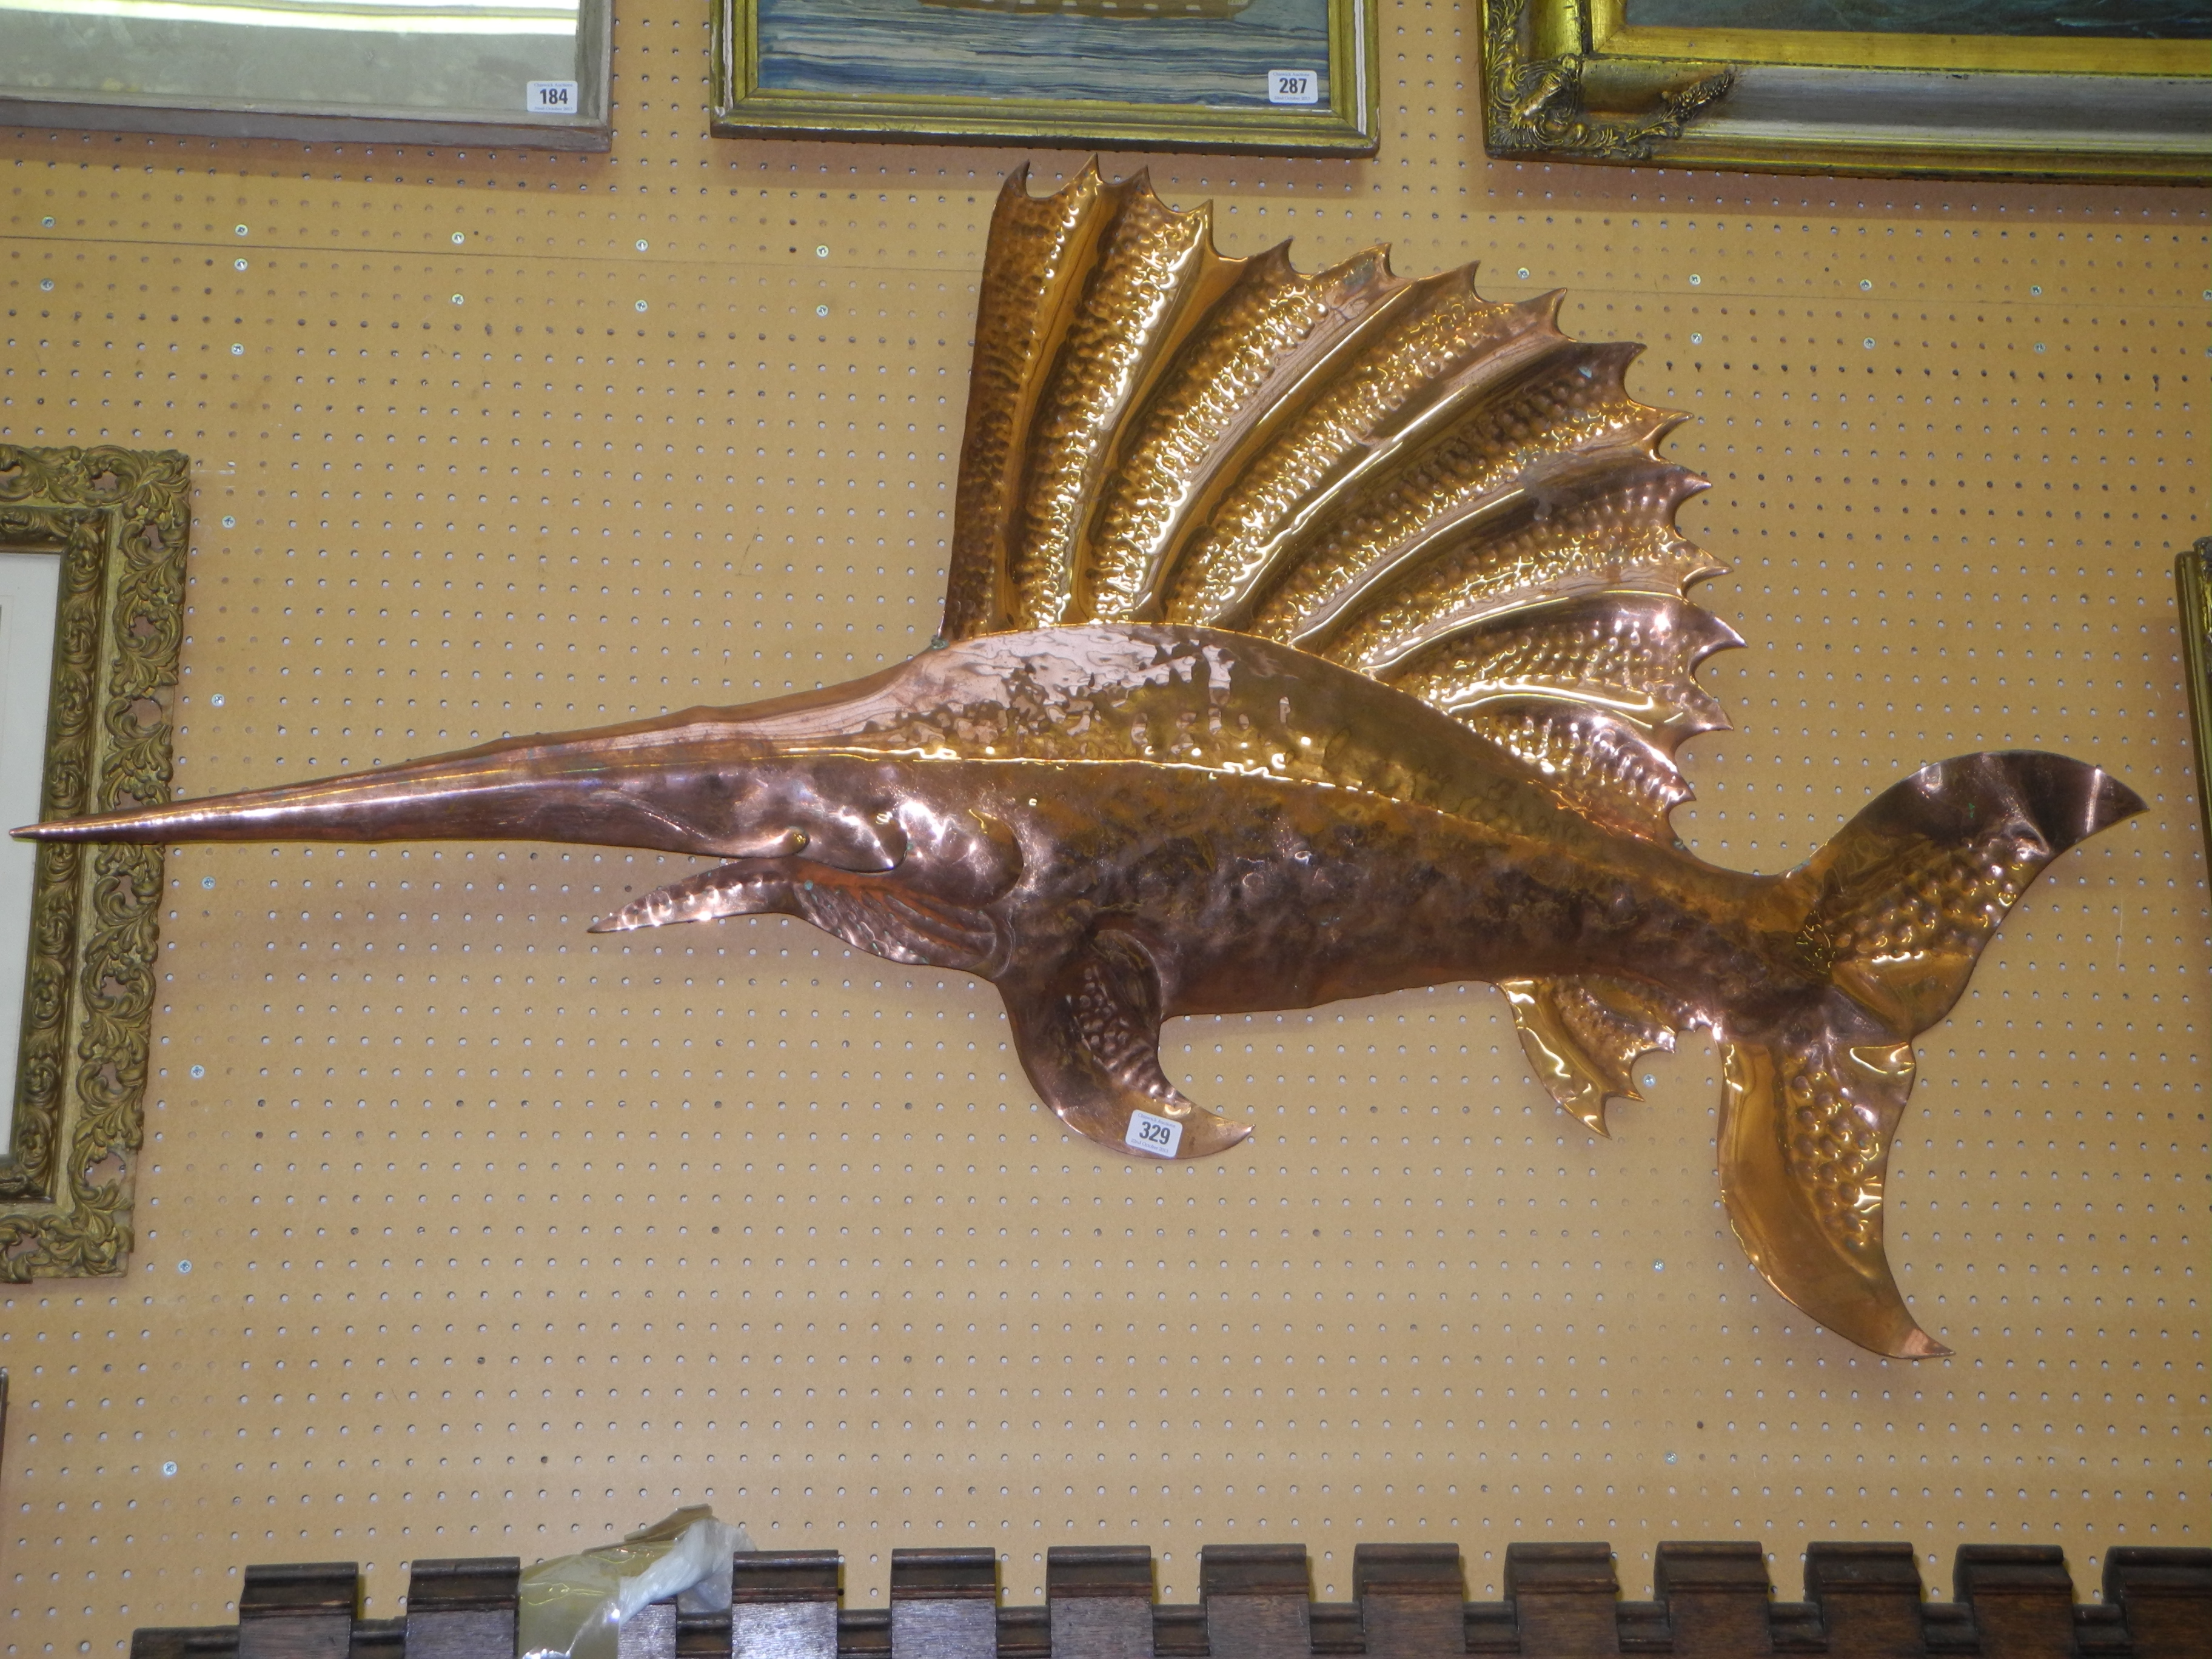 A decent sized copper sail fish.